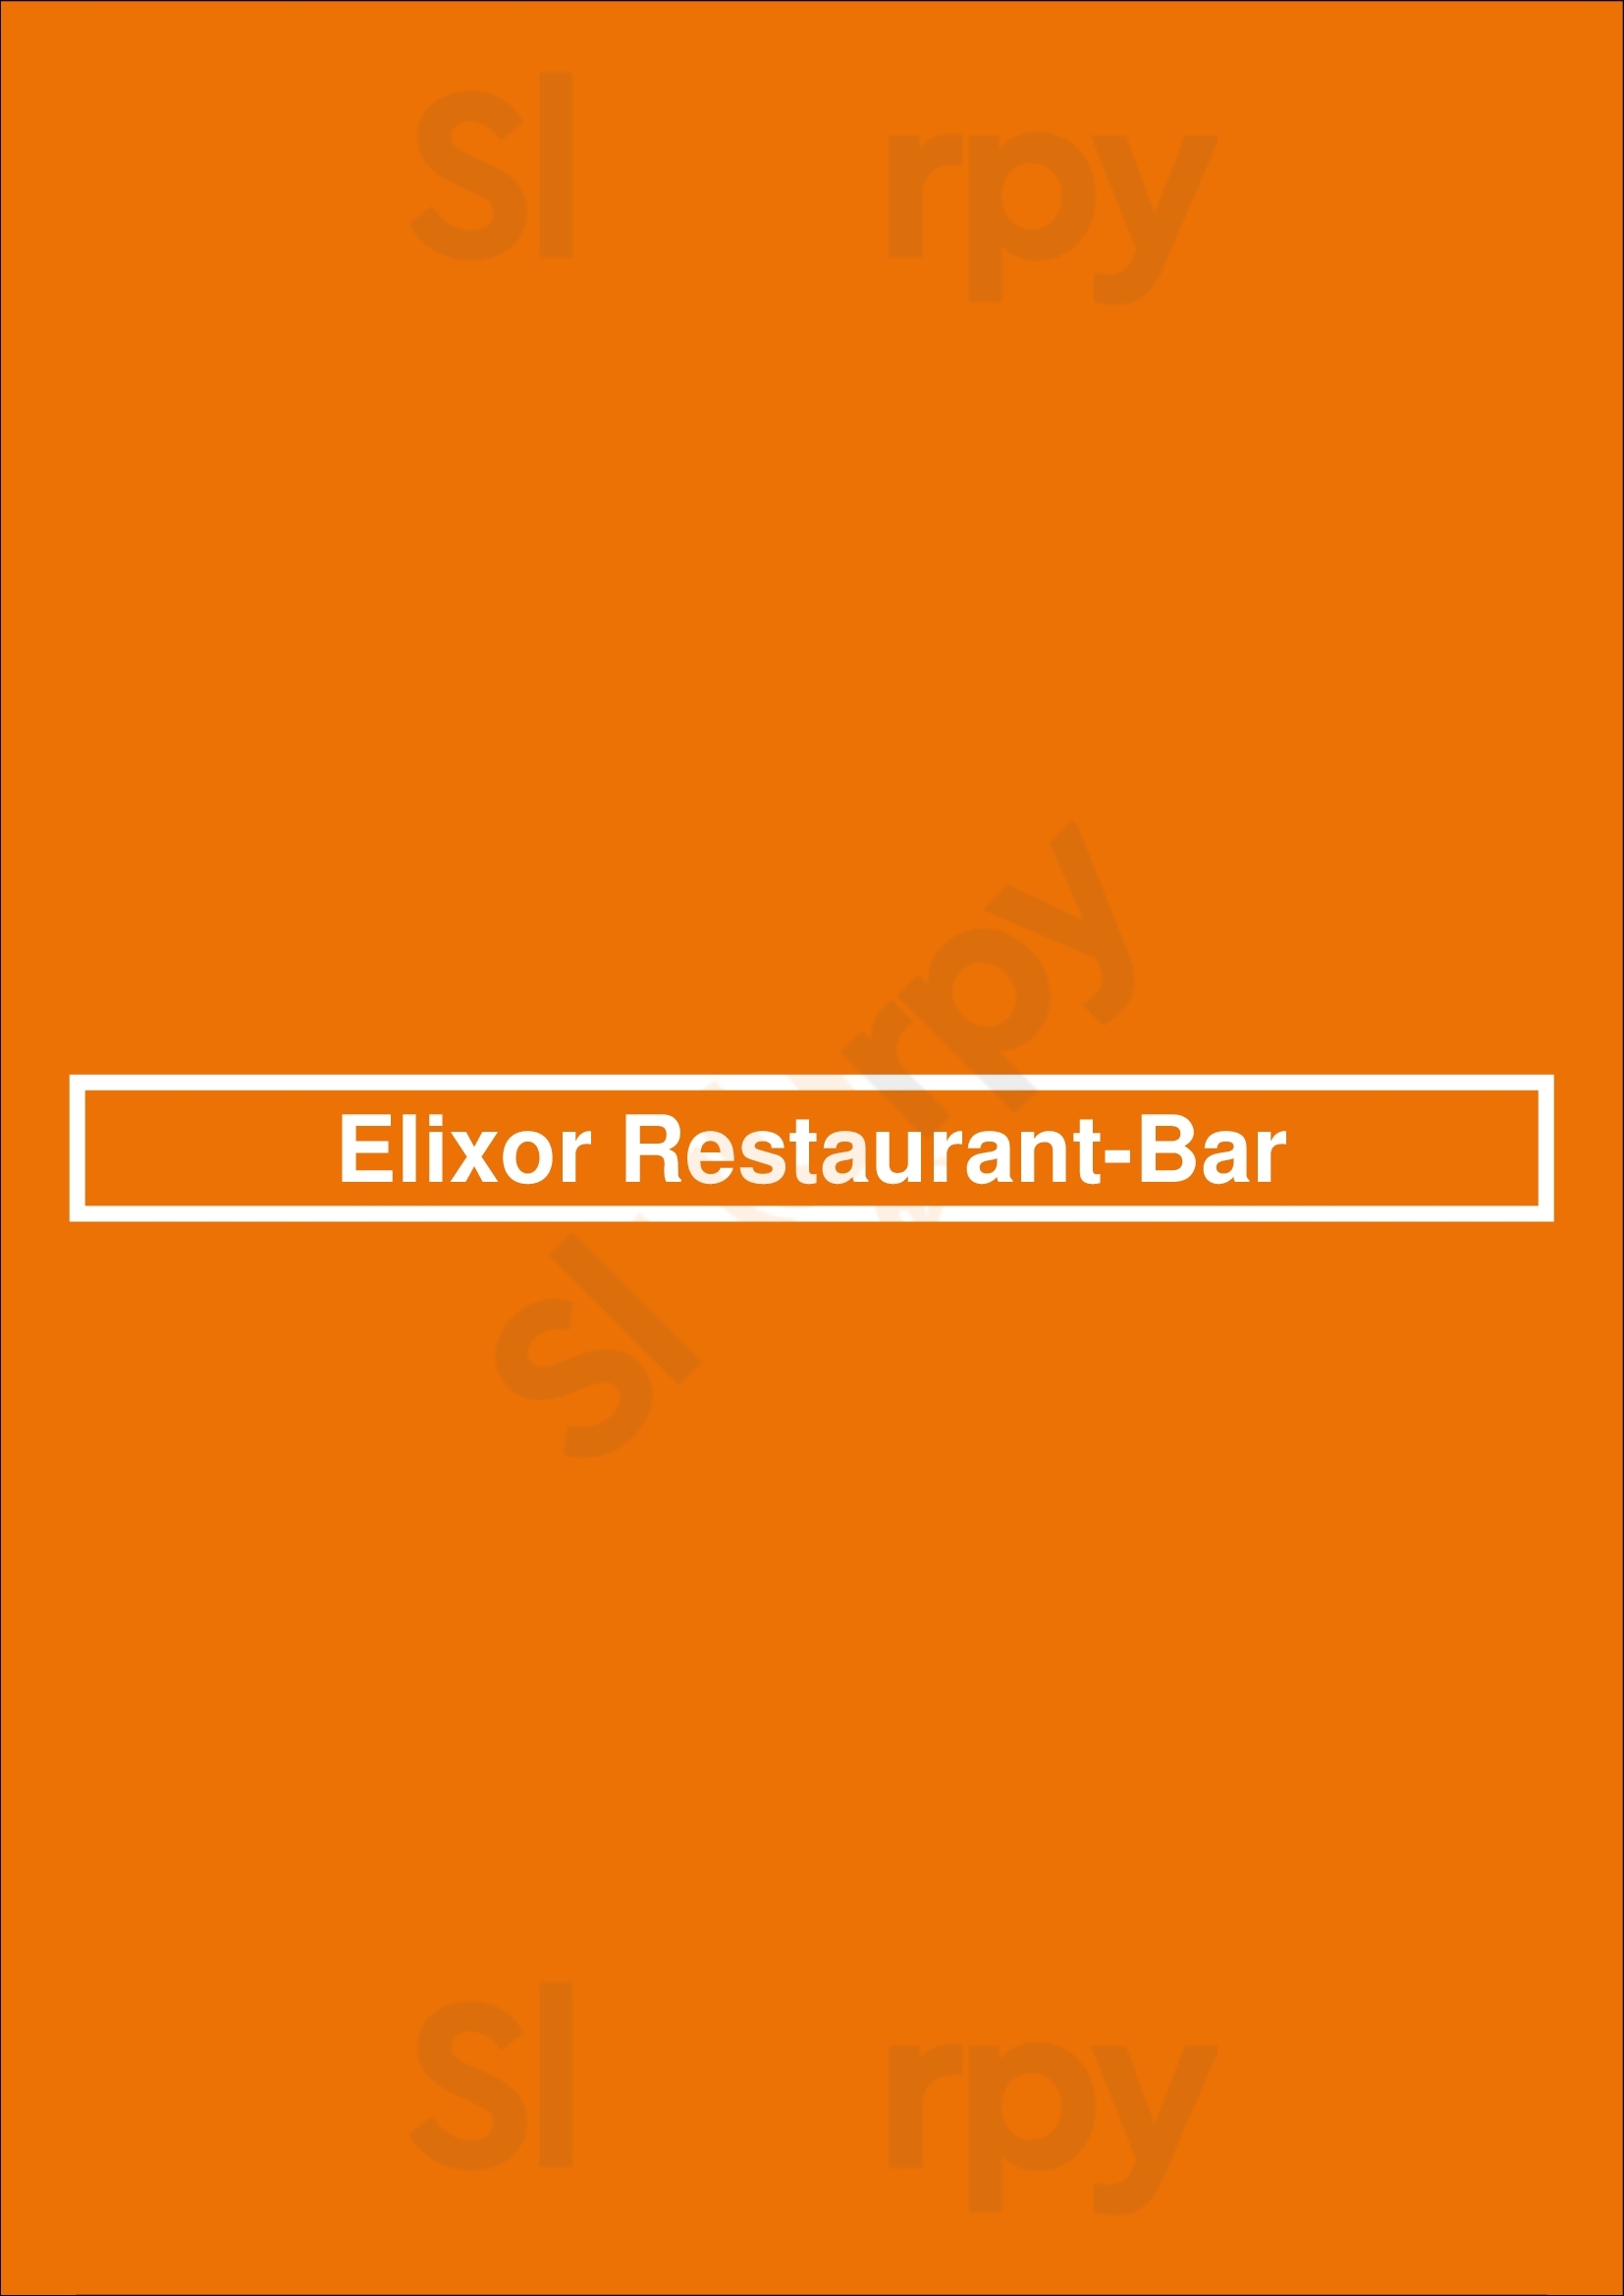 Elixor Restaurant-bar Laval Menu - 1